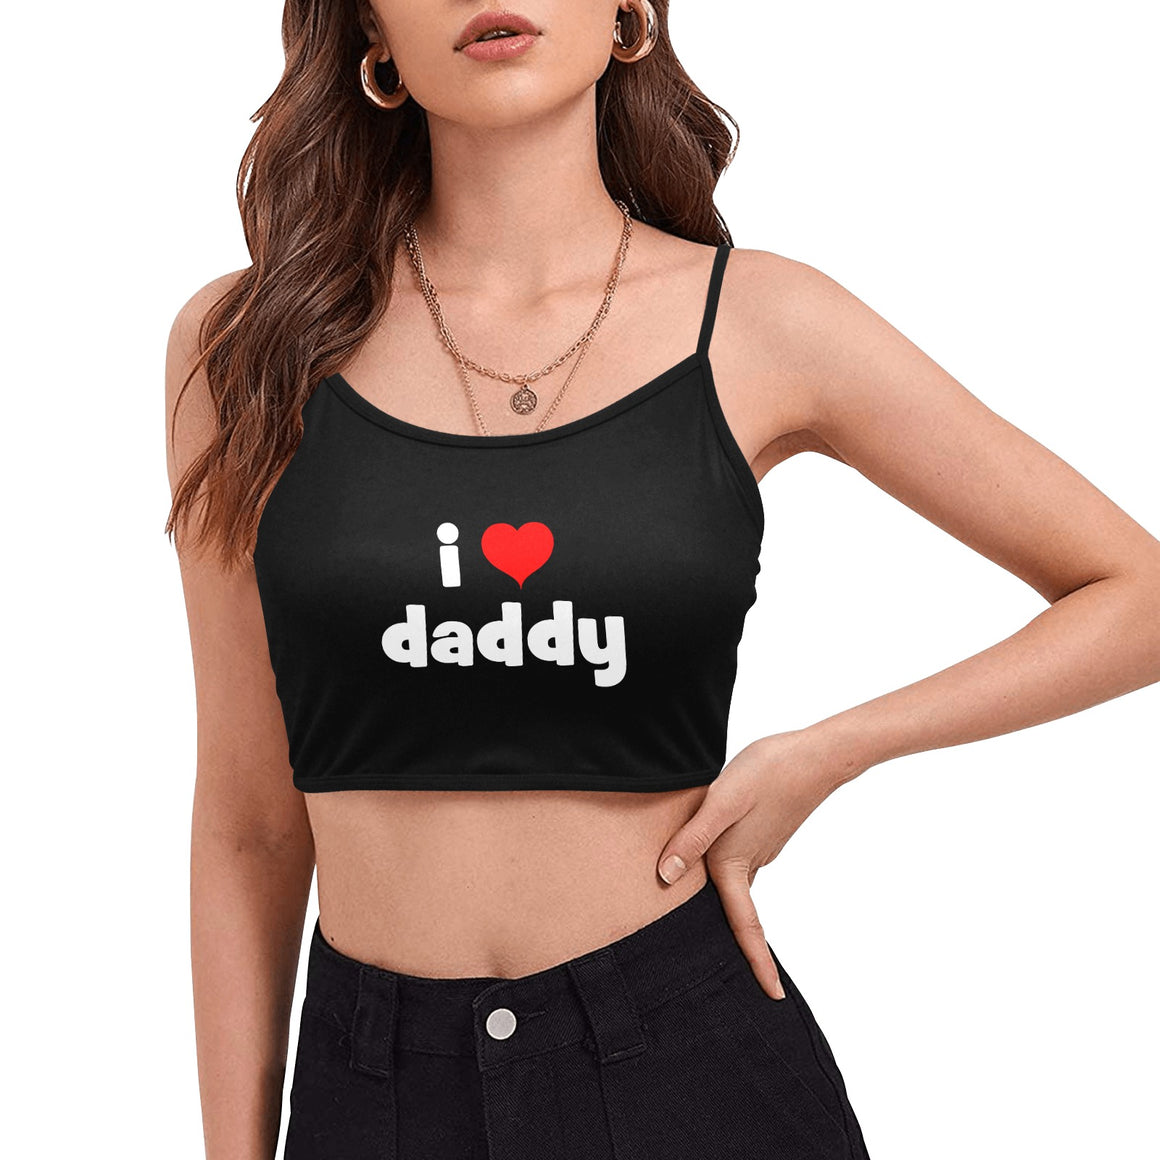 DDLG I Love Daddy Women's Spaghetti Strap Crop Top Shirt